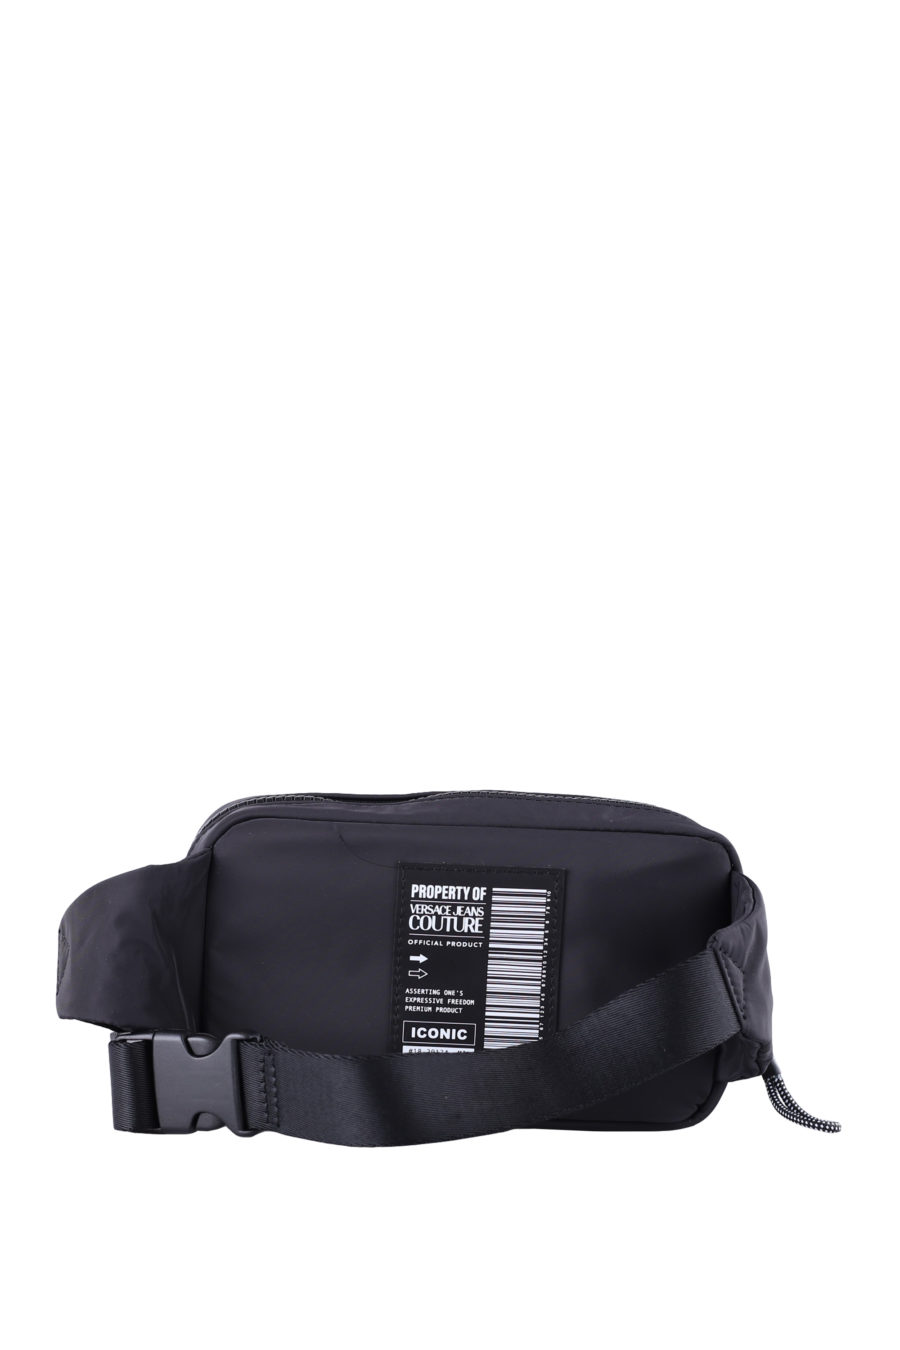 Black bum bag with rubberised logo - fbf123030245fd6c12c12cbb170f89f893425c1f028f6